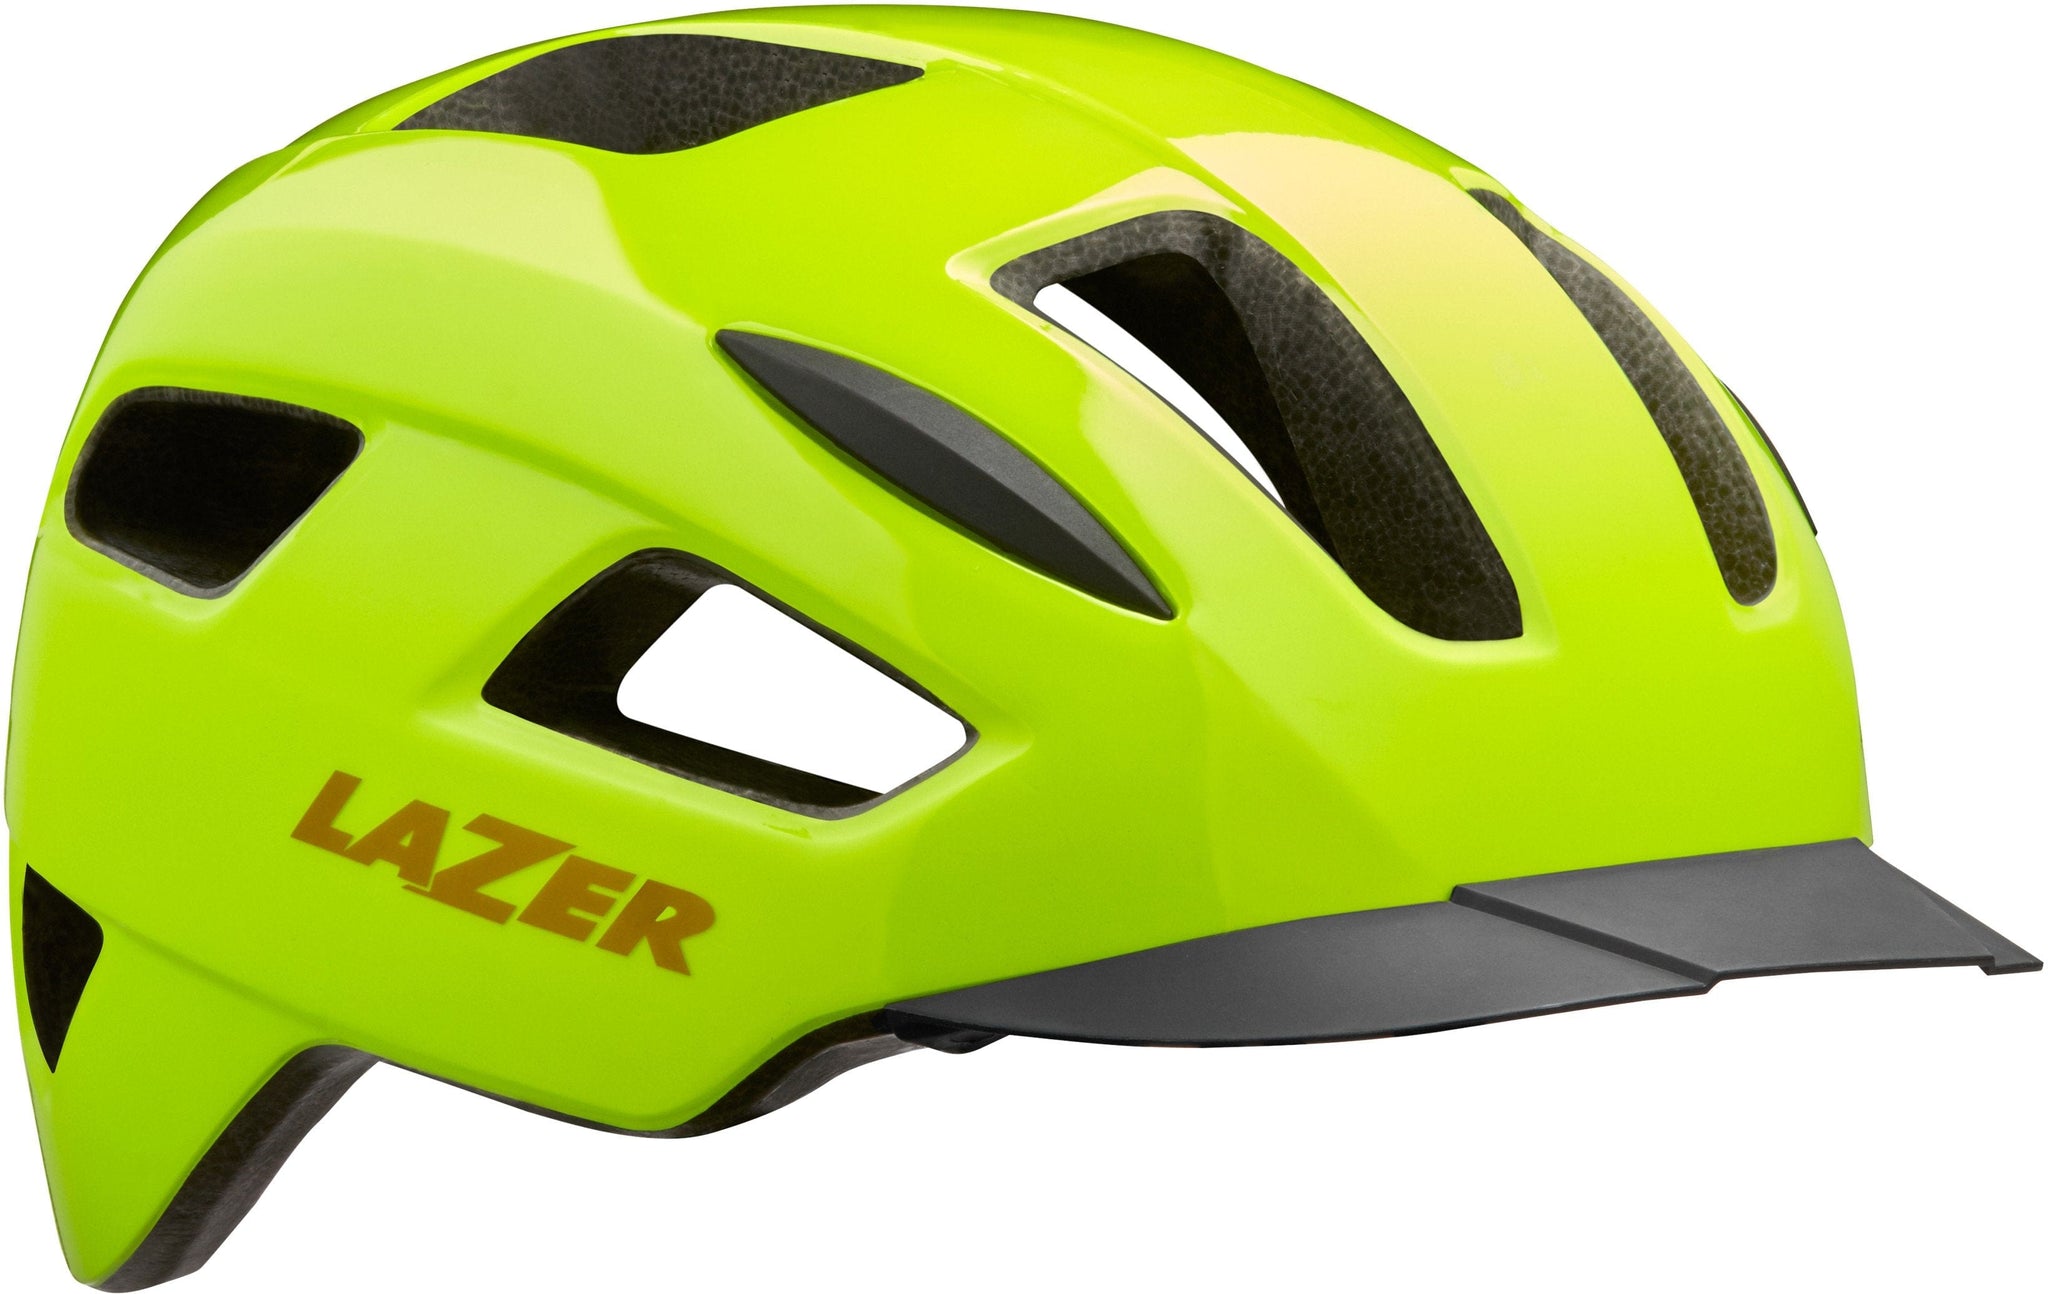 Lazer Lizard Helmet - Yellow